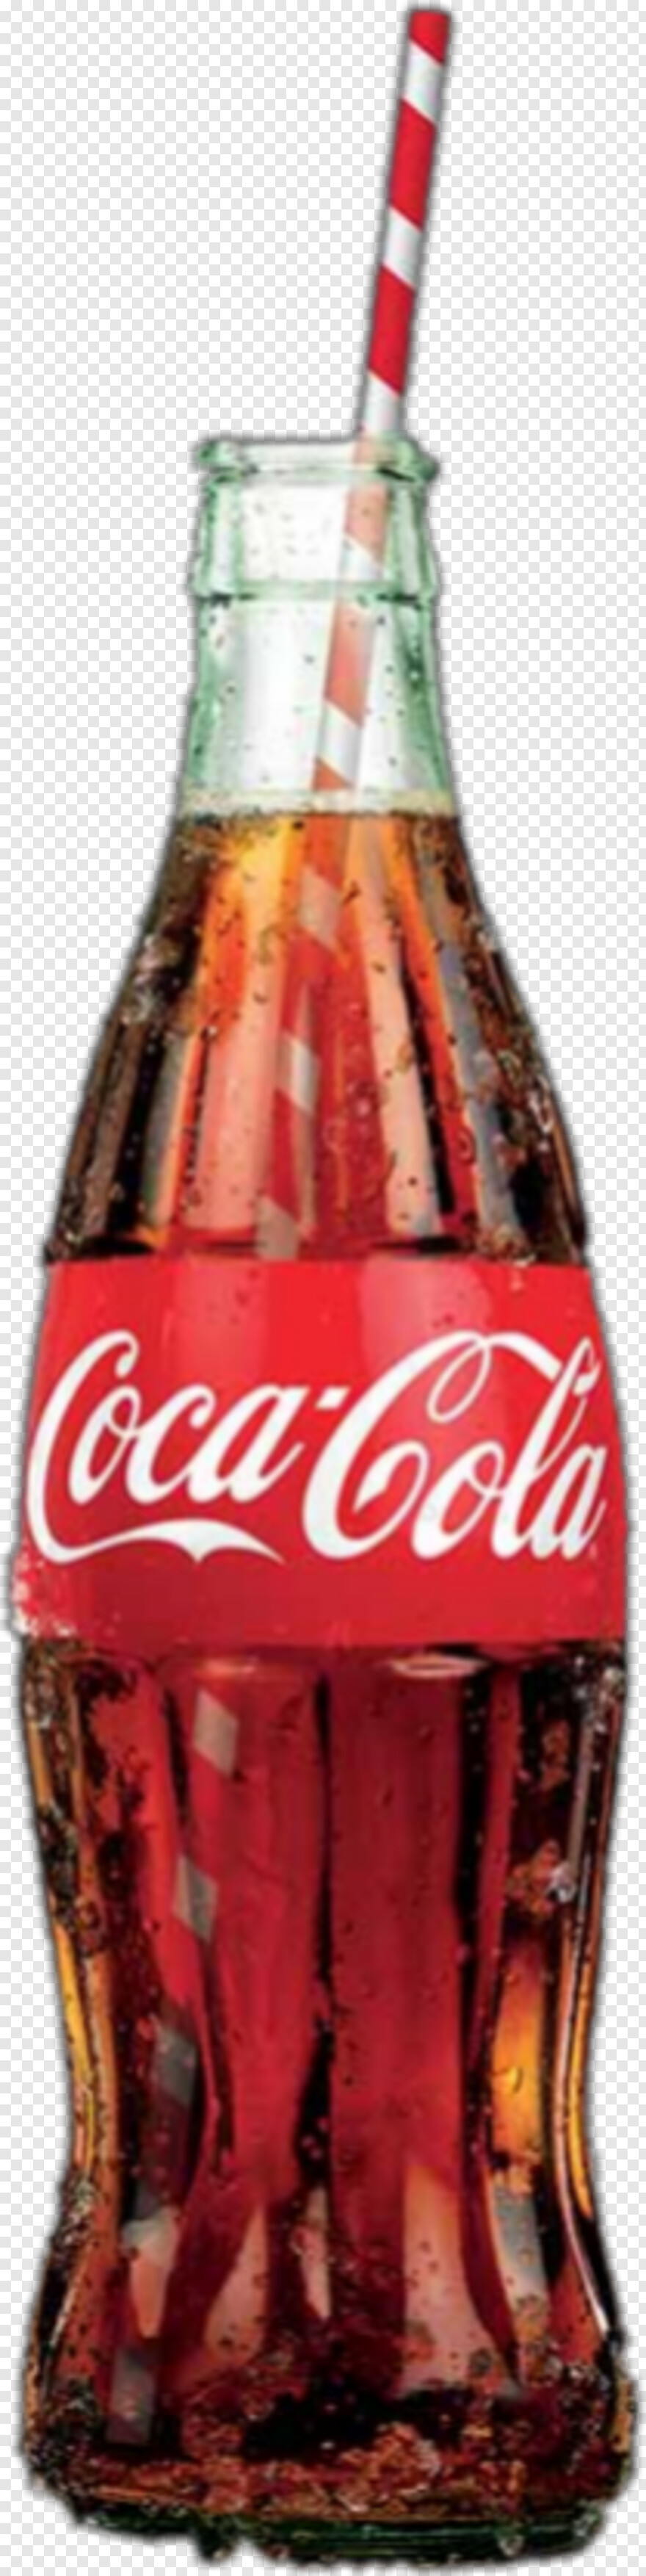 coca-cola # 325195